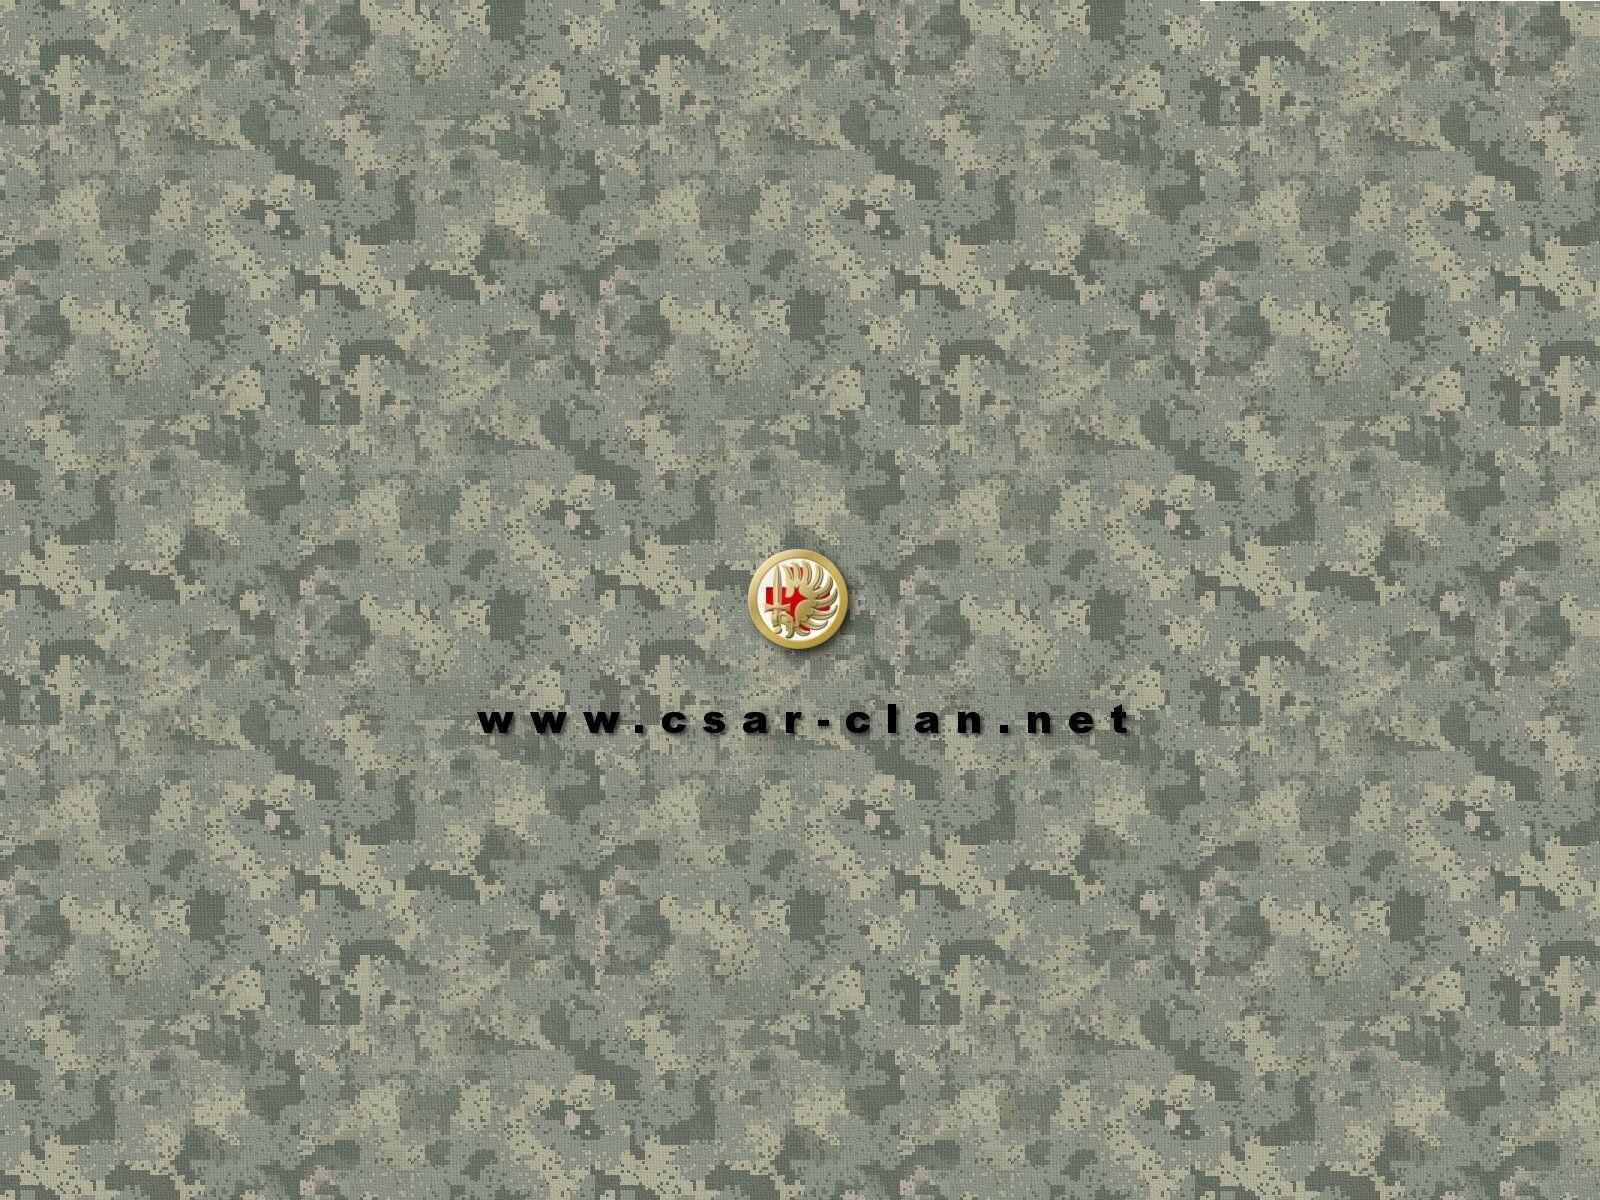 FULL WALLPAPER: Digital camouflage wallpaper